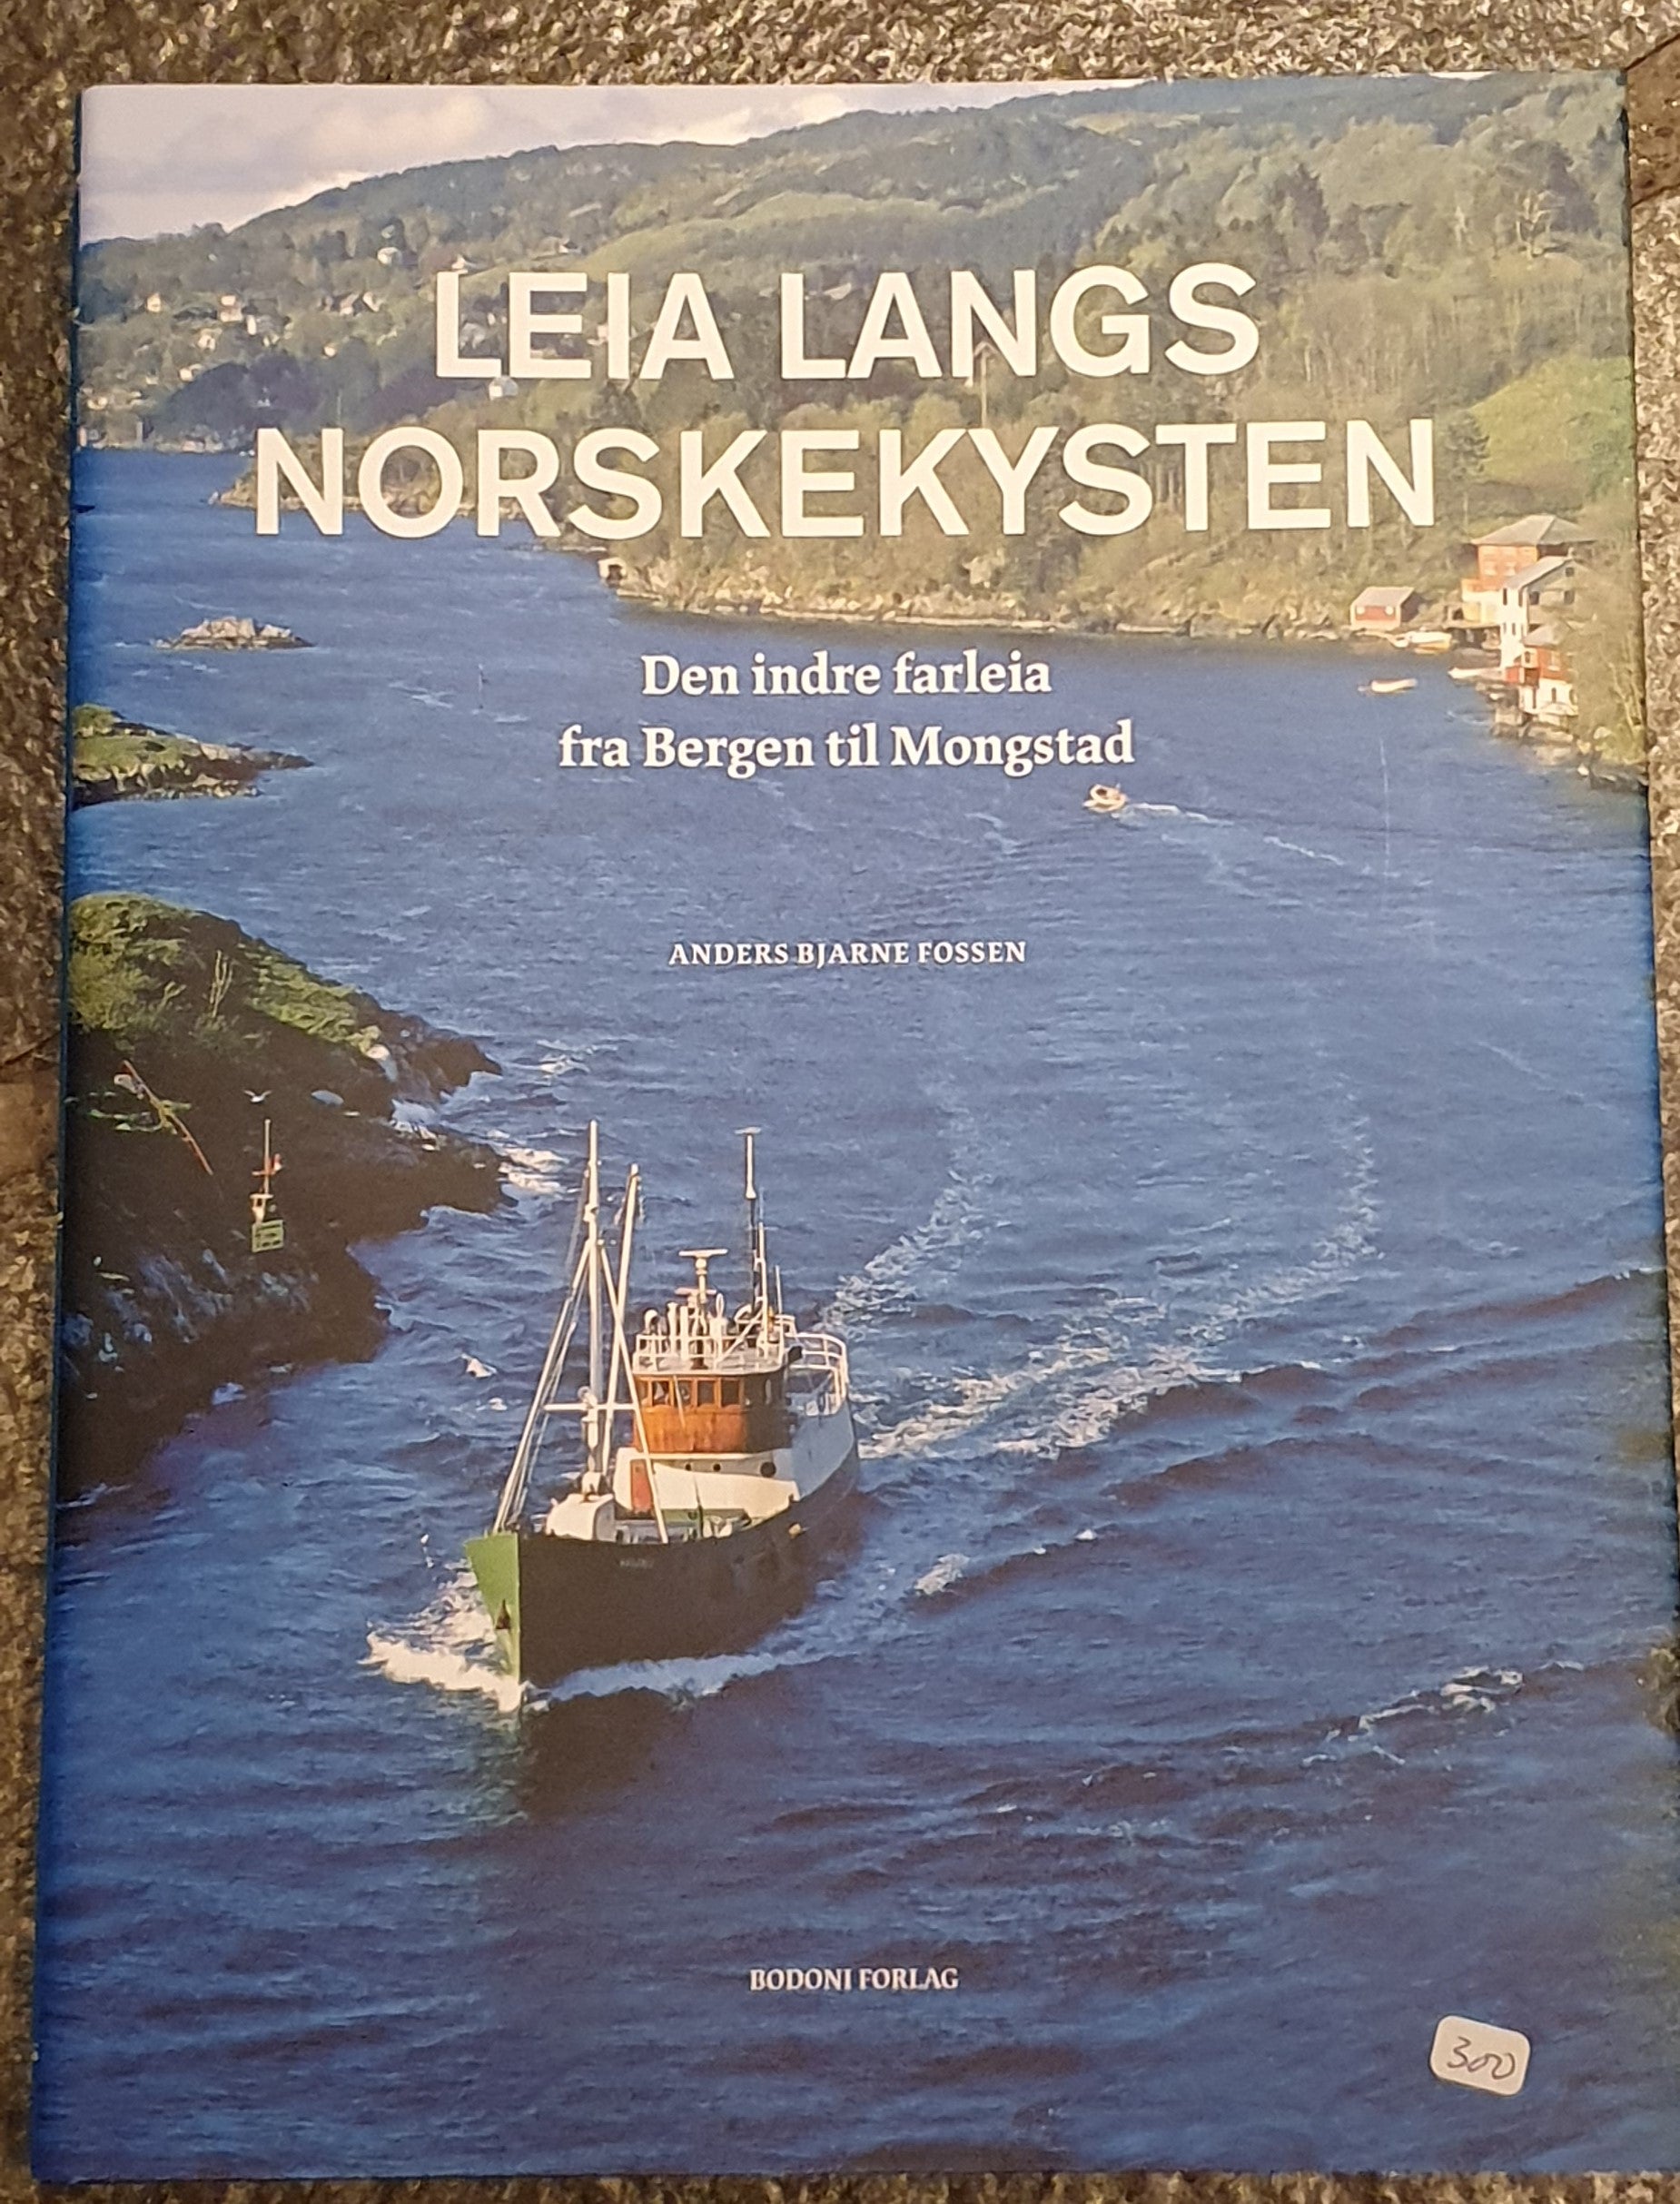 Leia langs norskekysten – den indre farleia fra Bergen til Mongstad